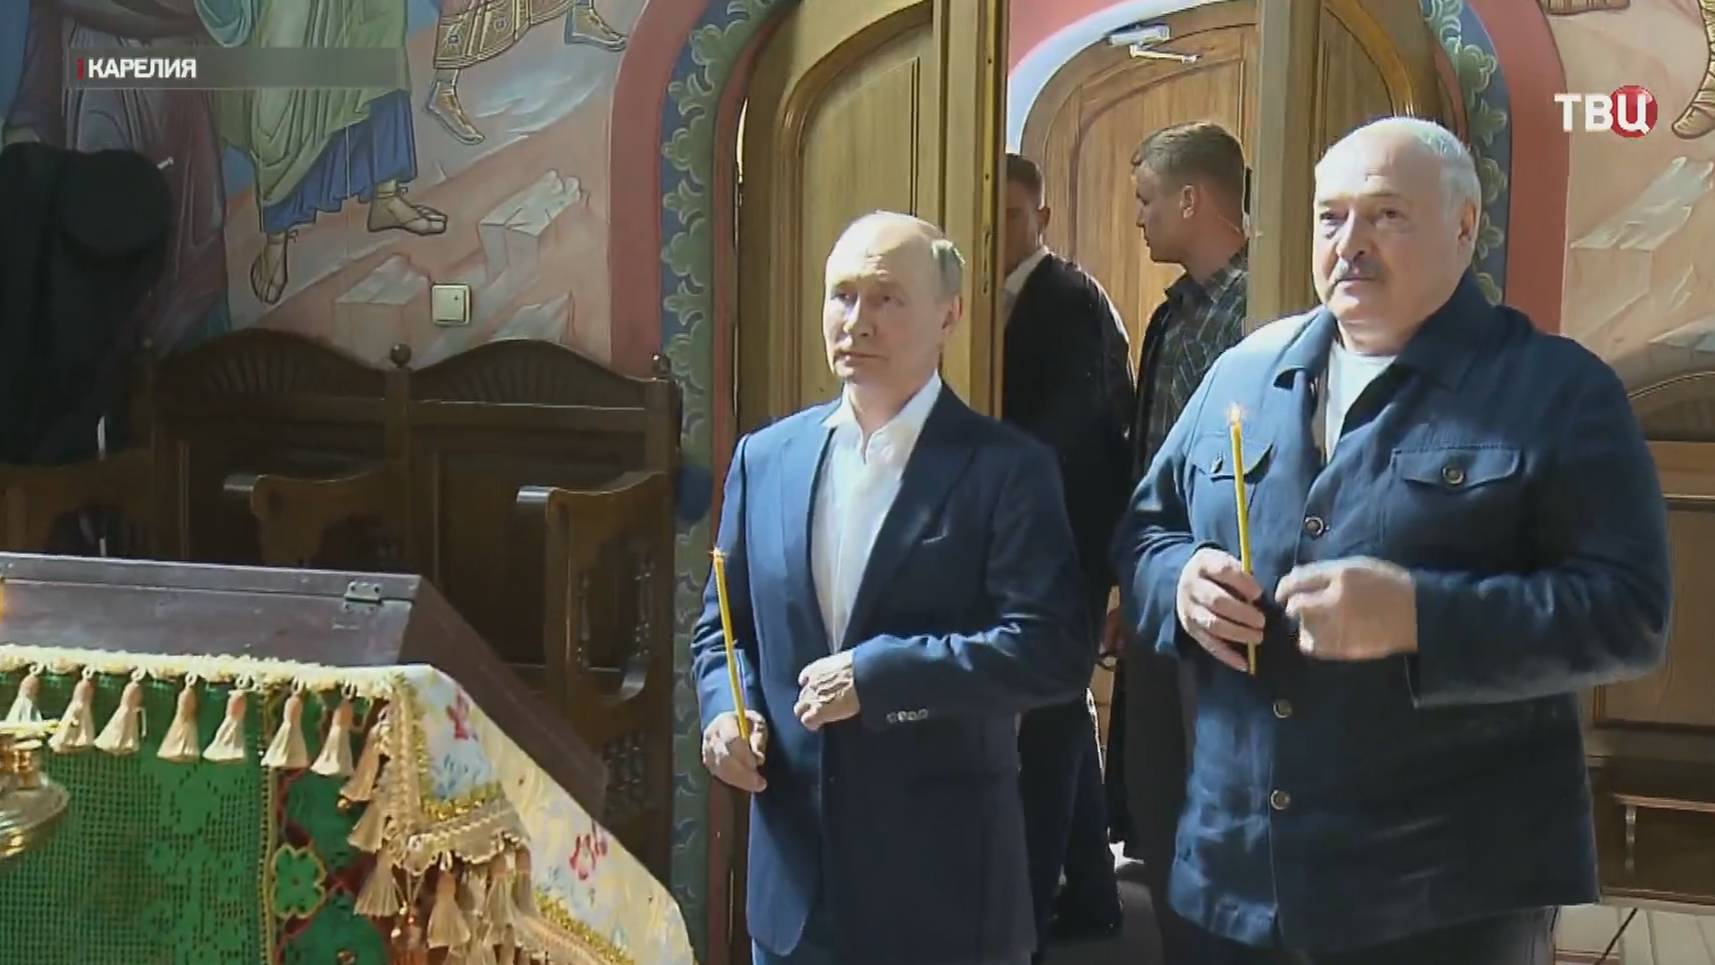 Путин и Лукашенко встретились на Валааме / События на ТВЦ